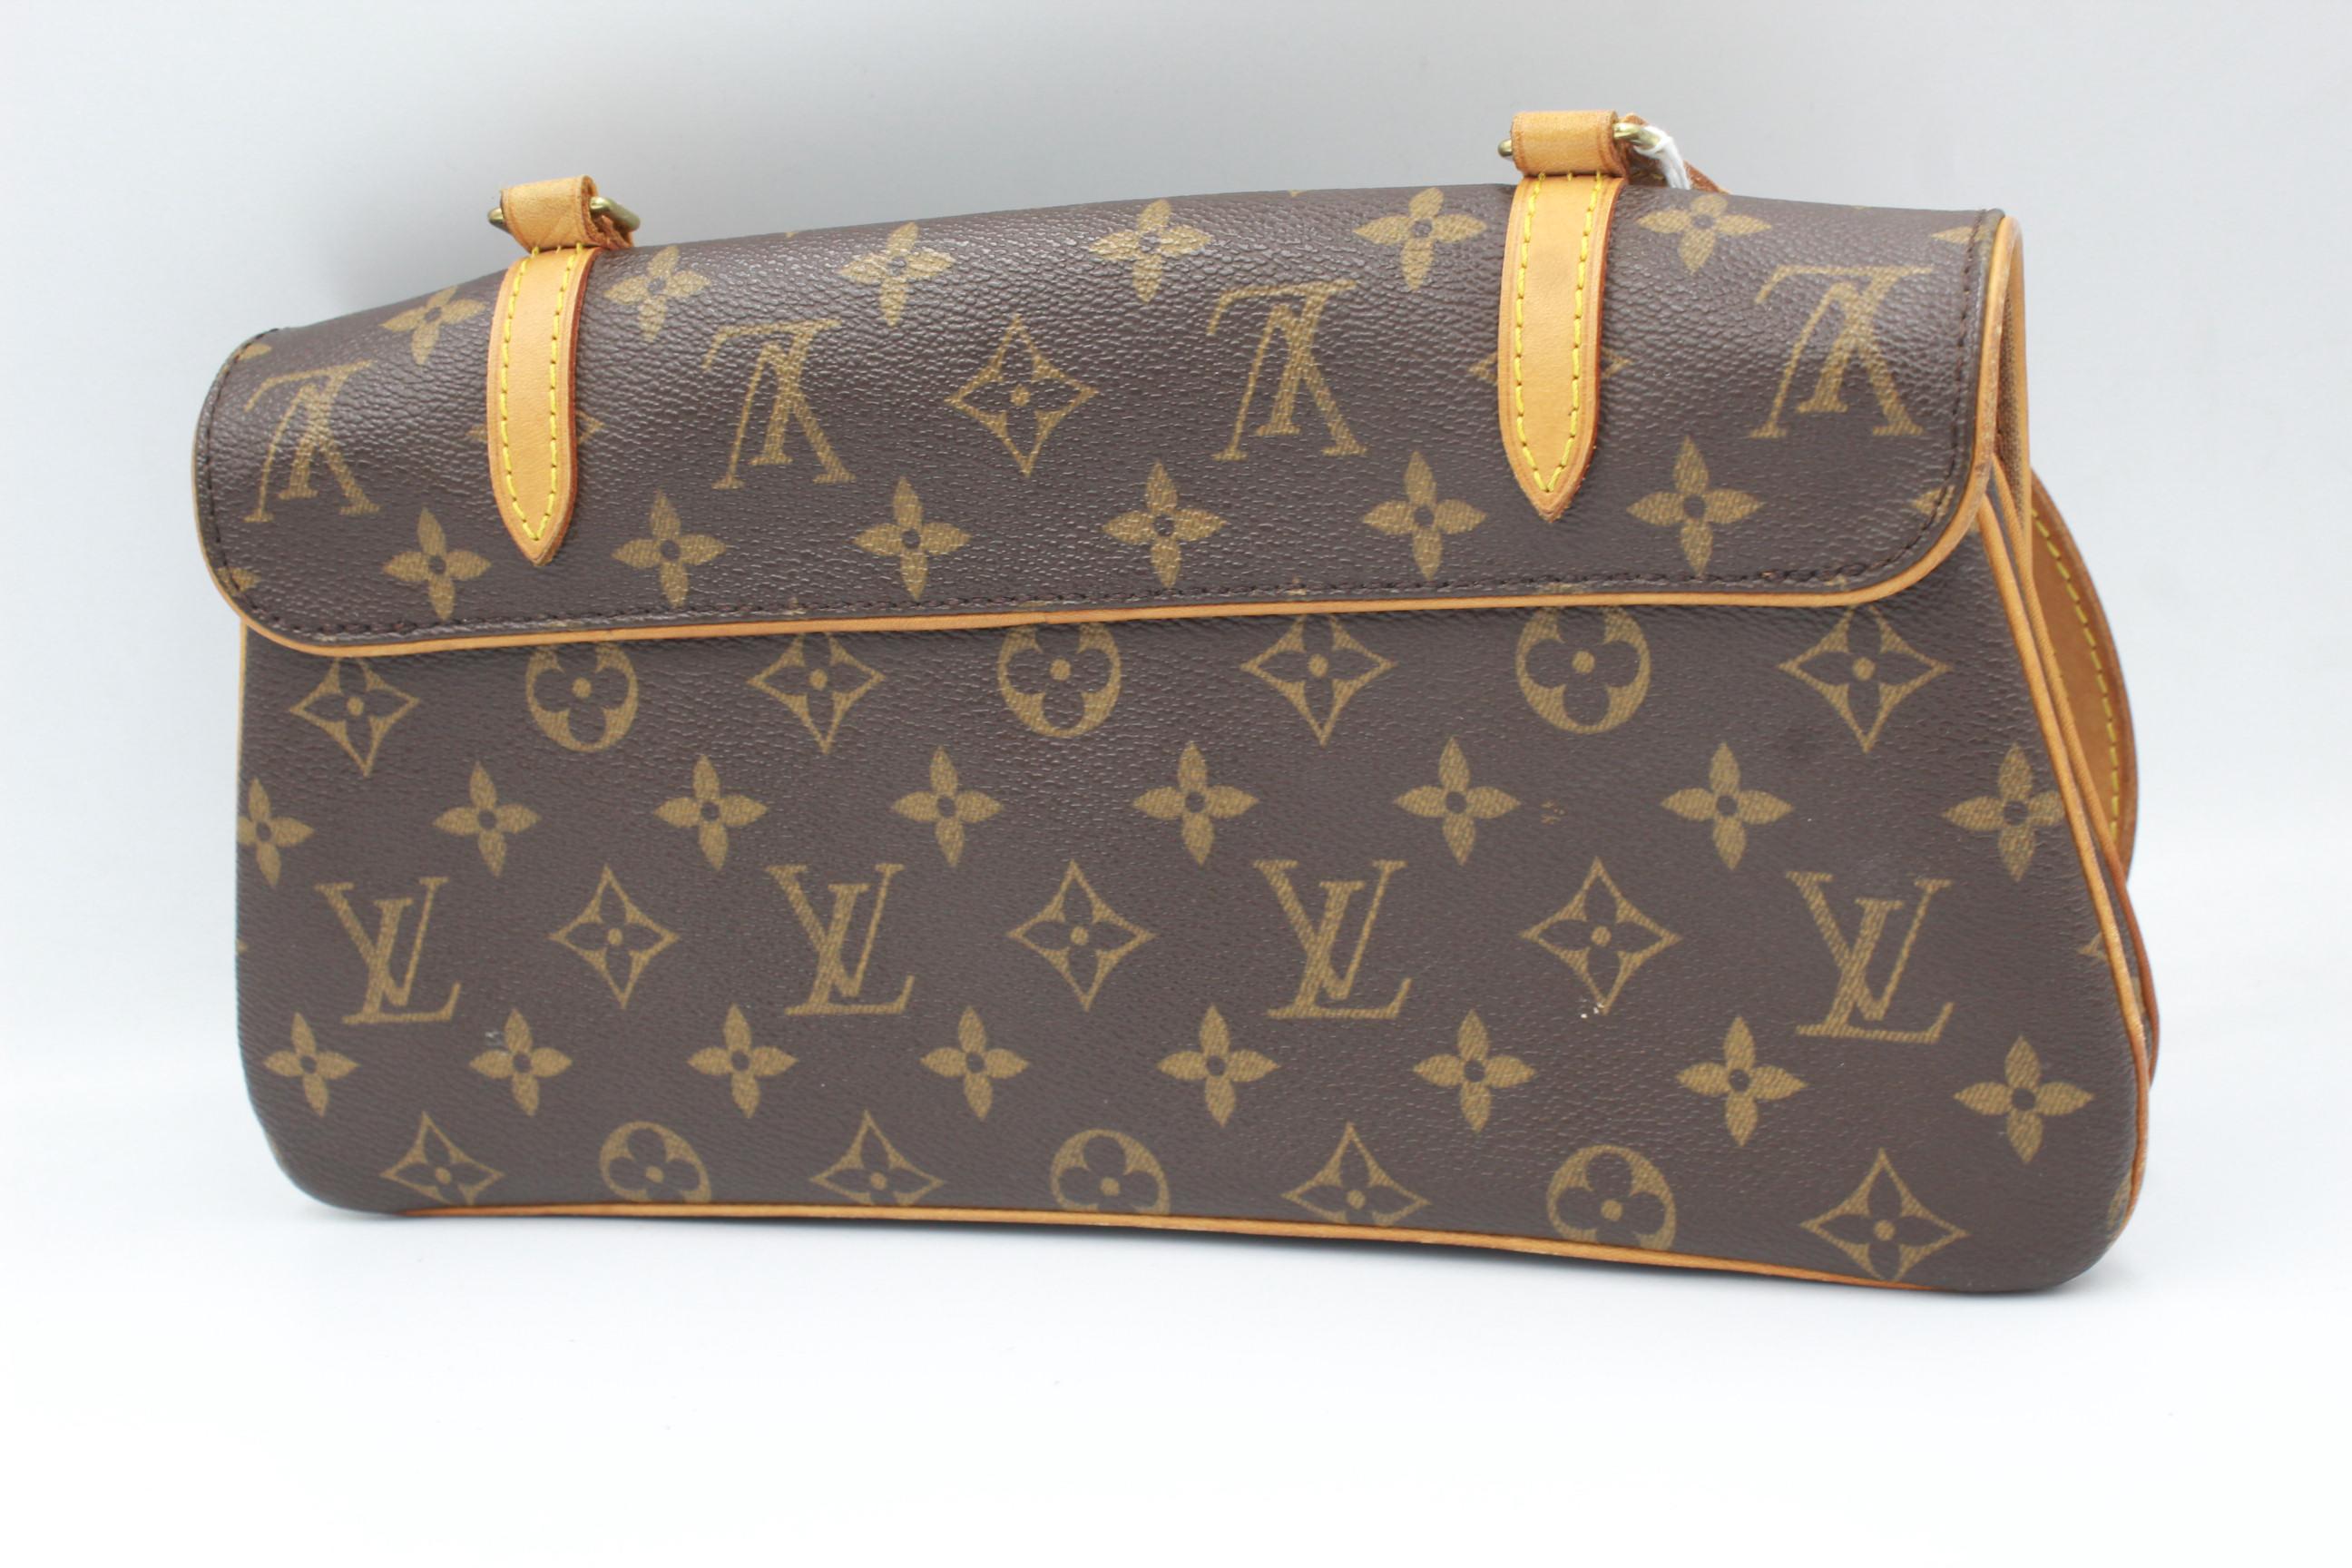 Louis Vuitton Marelle handbag in monogram canvas.
2 pockets inside.
Good condition. 
31cm x 16cm x 4cm